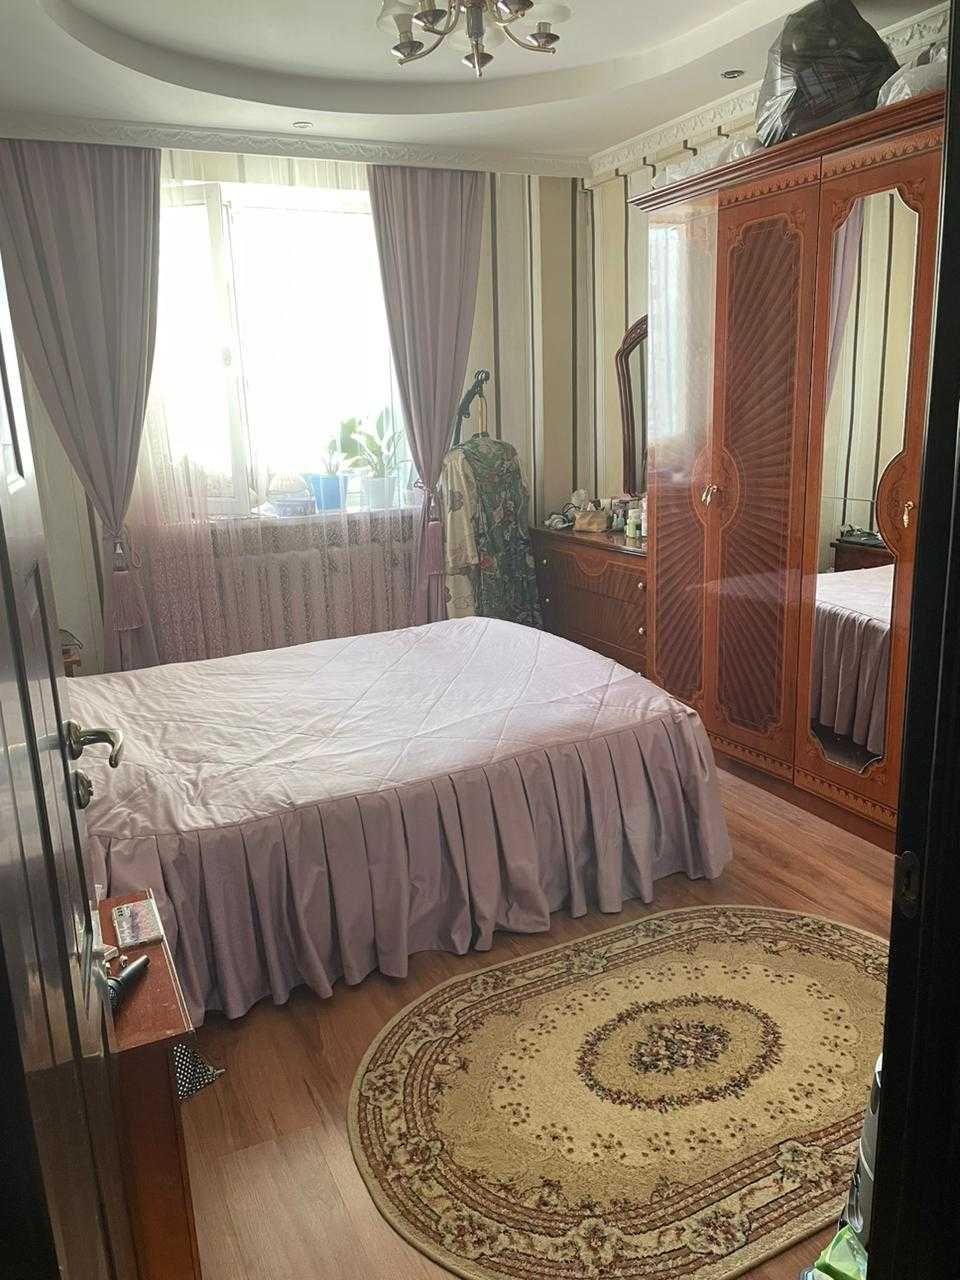 Продам 3-х комнатную квартиру в Алматинском районе!